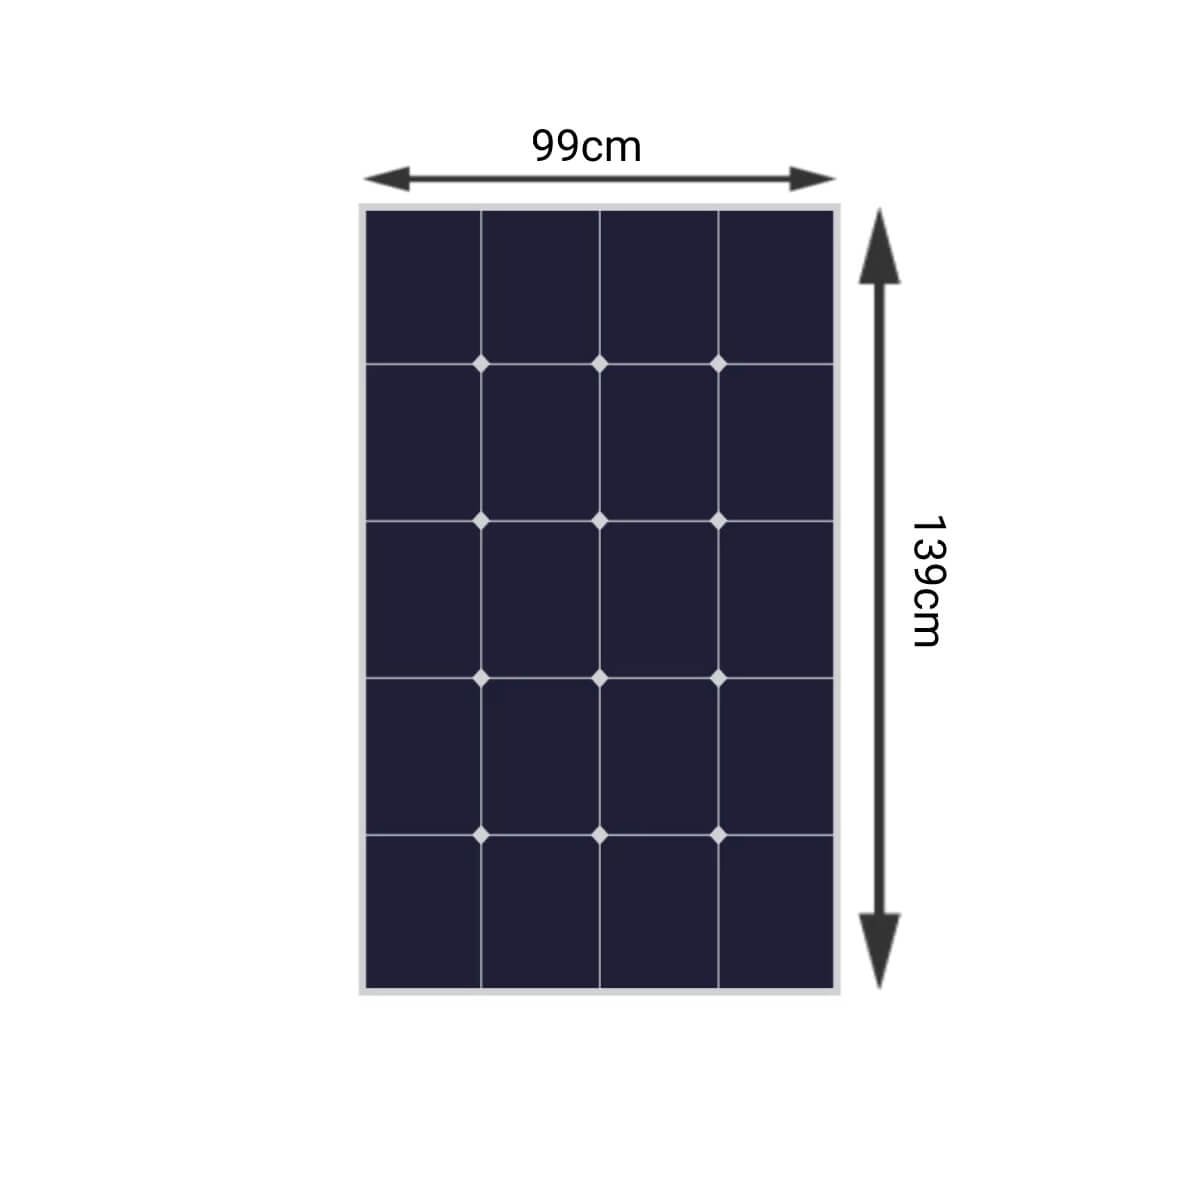 250W Solar Panel Kit – 1x 250W dimensions